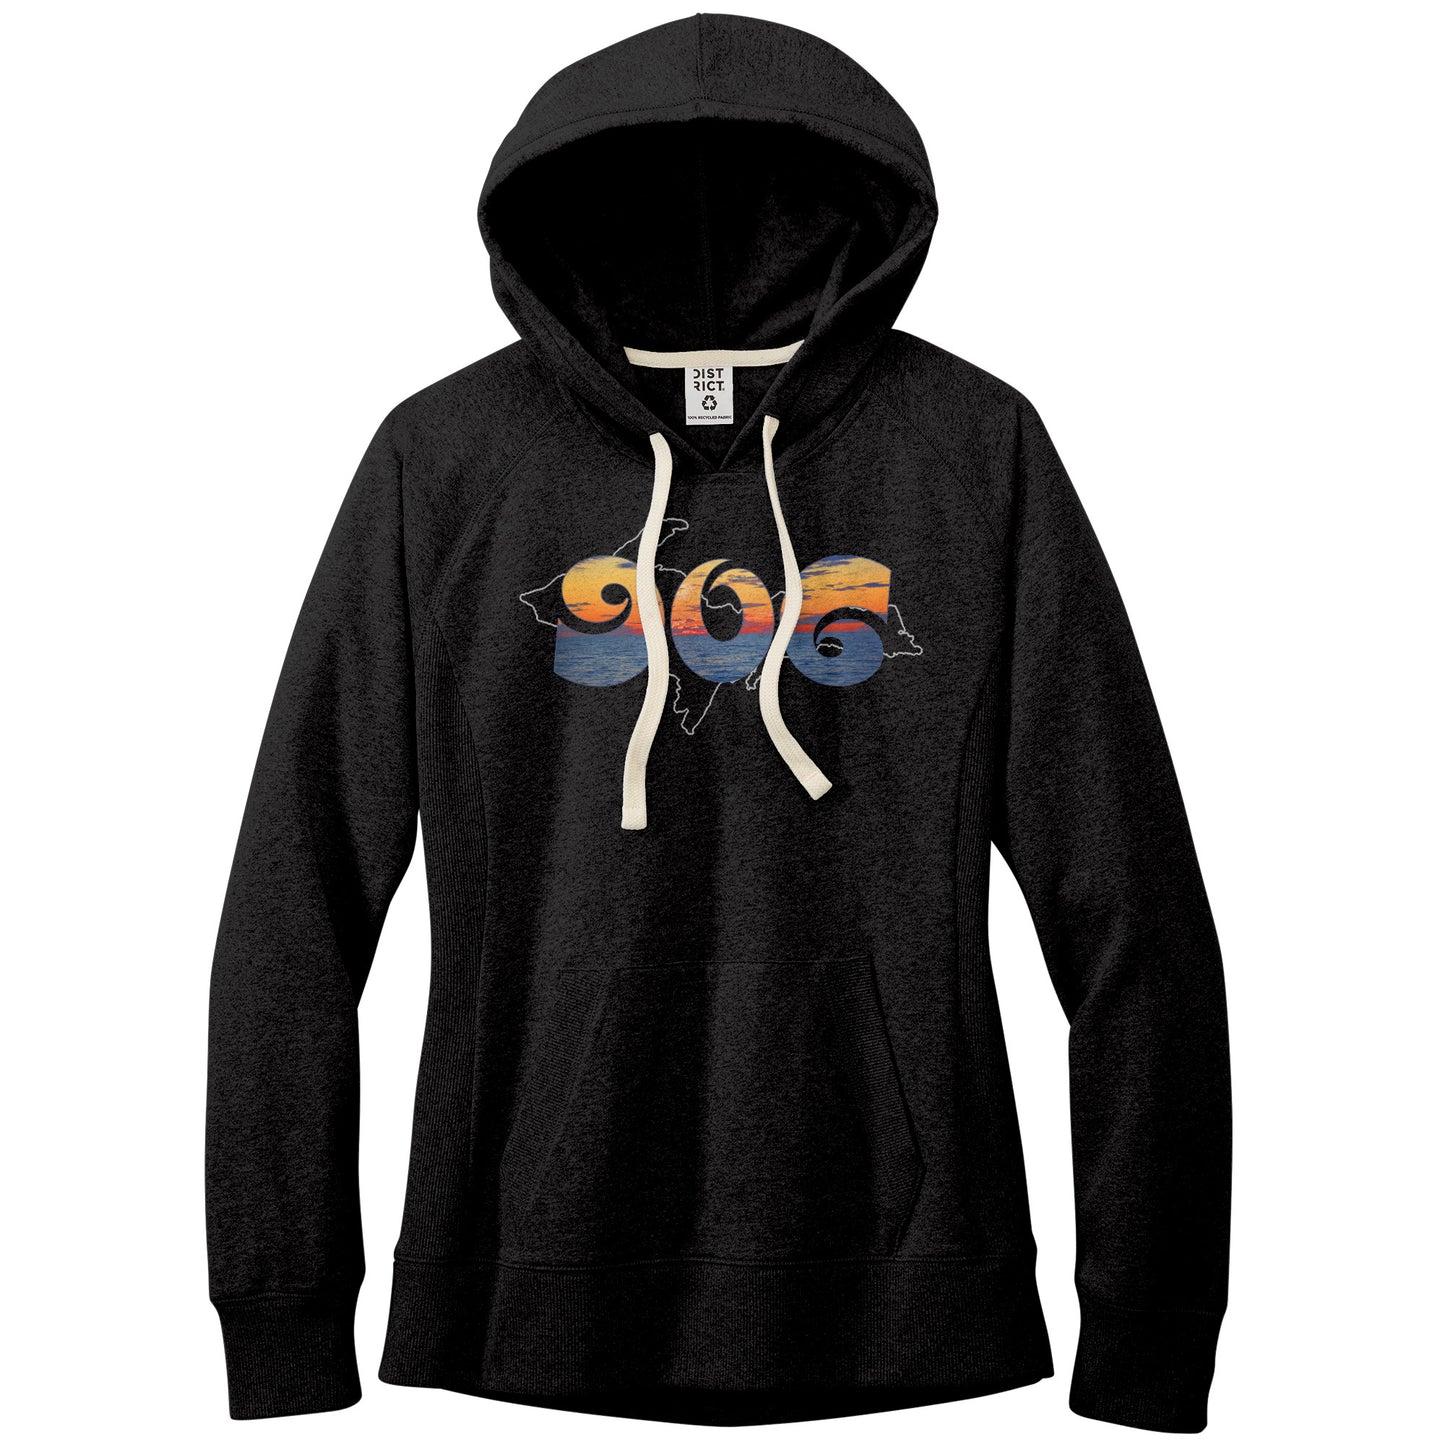 Yooper 906 Hoodie | Upper Michigan Gift | Upper Peninsula Hooded Sweatshirt